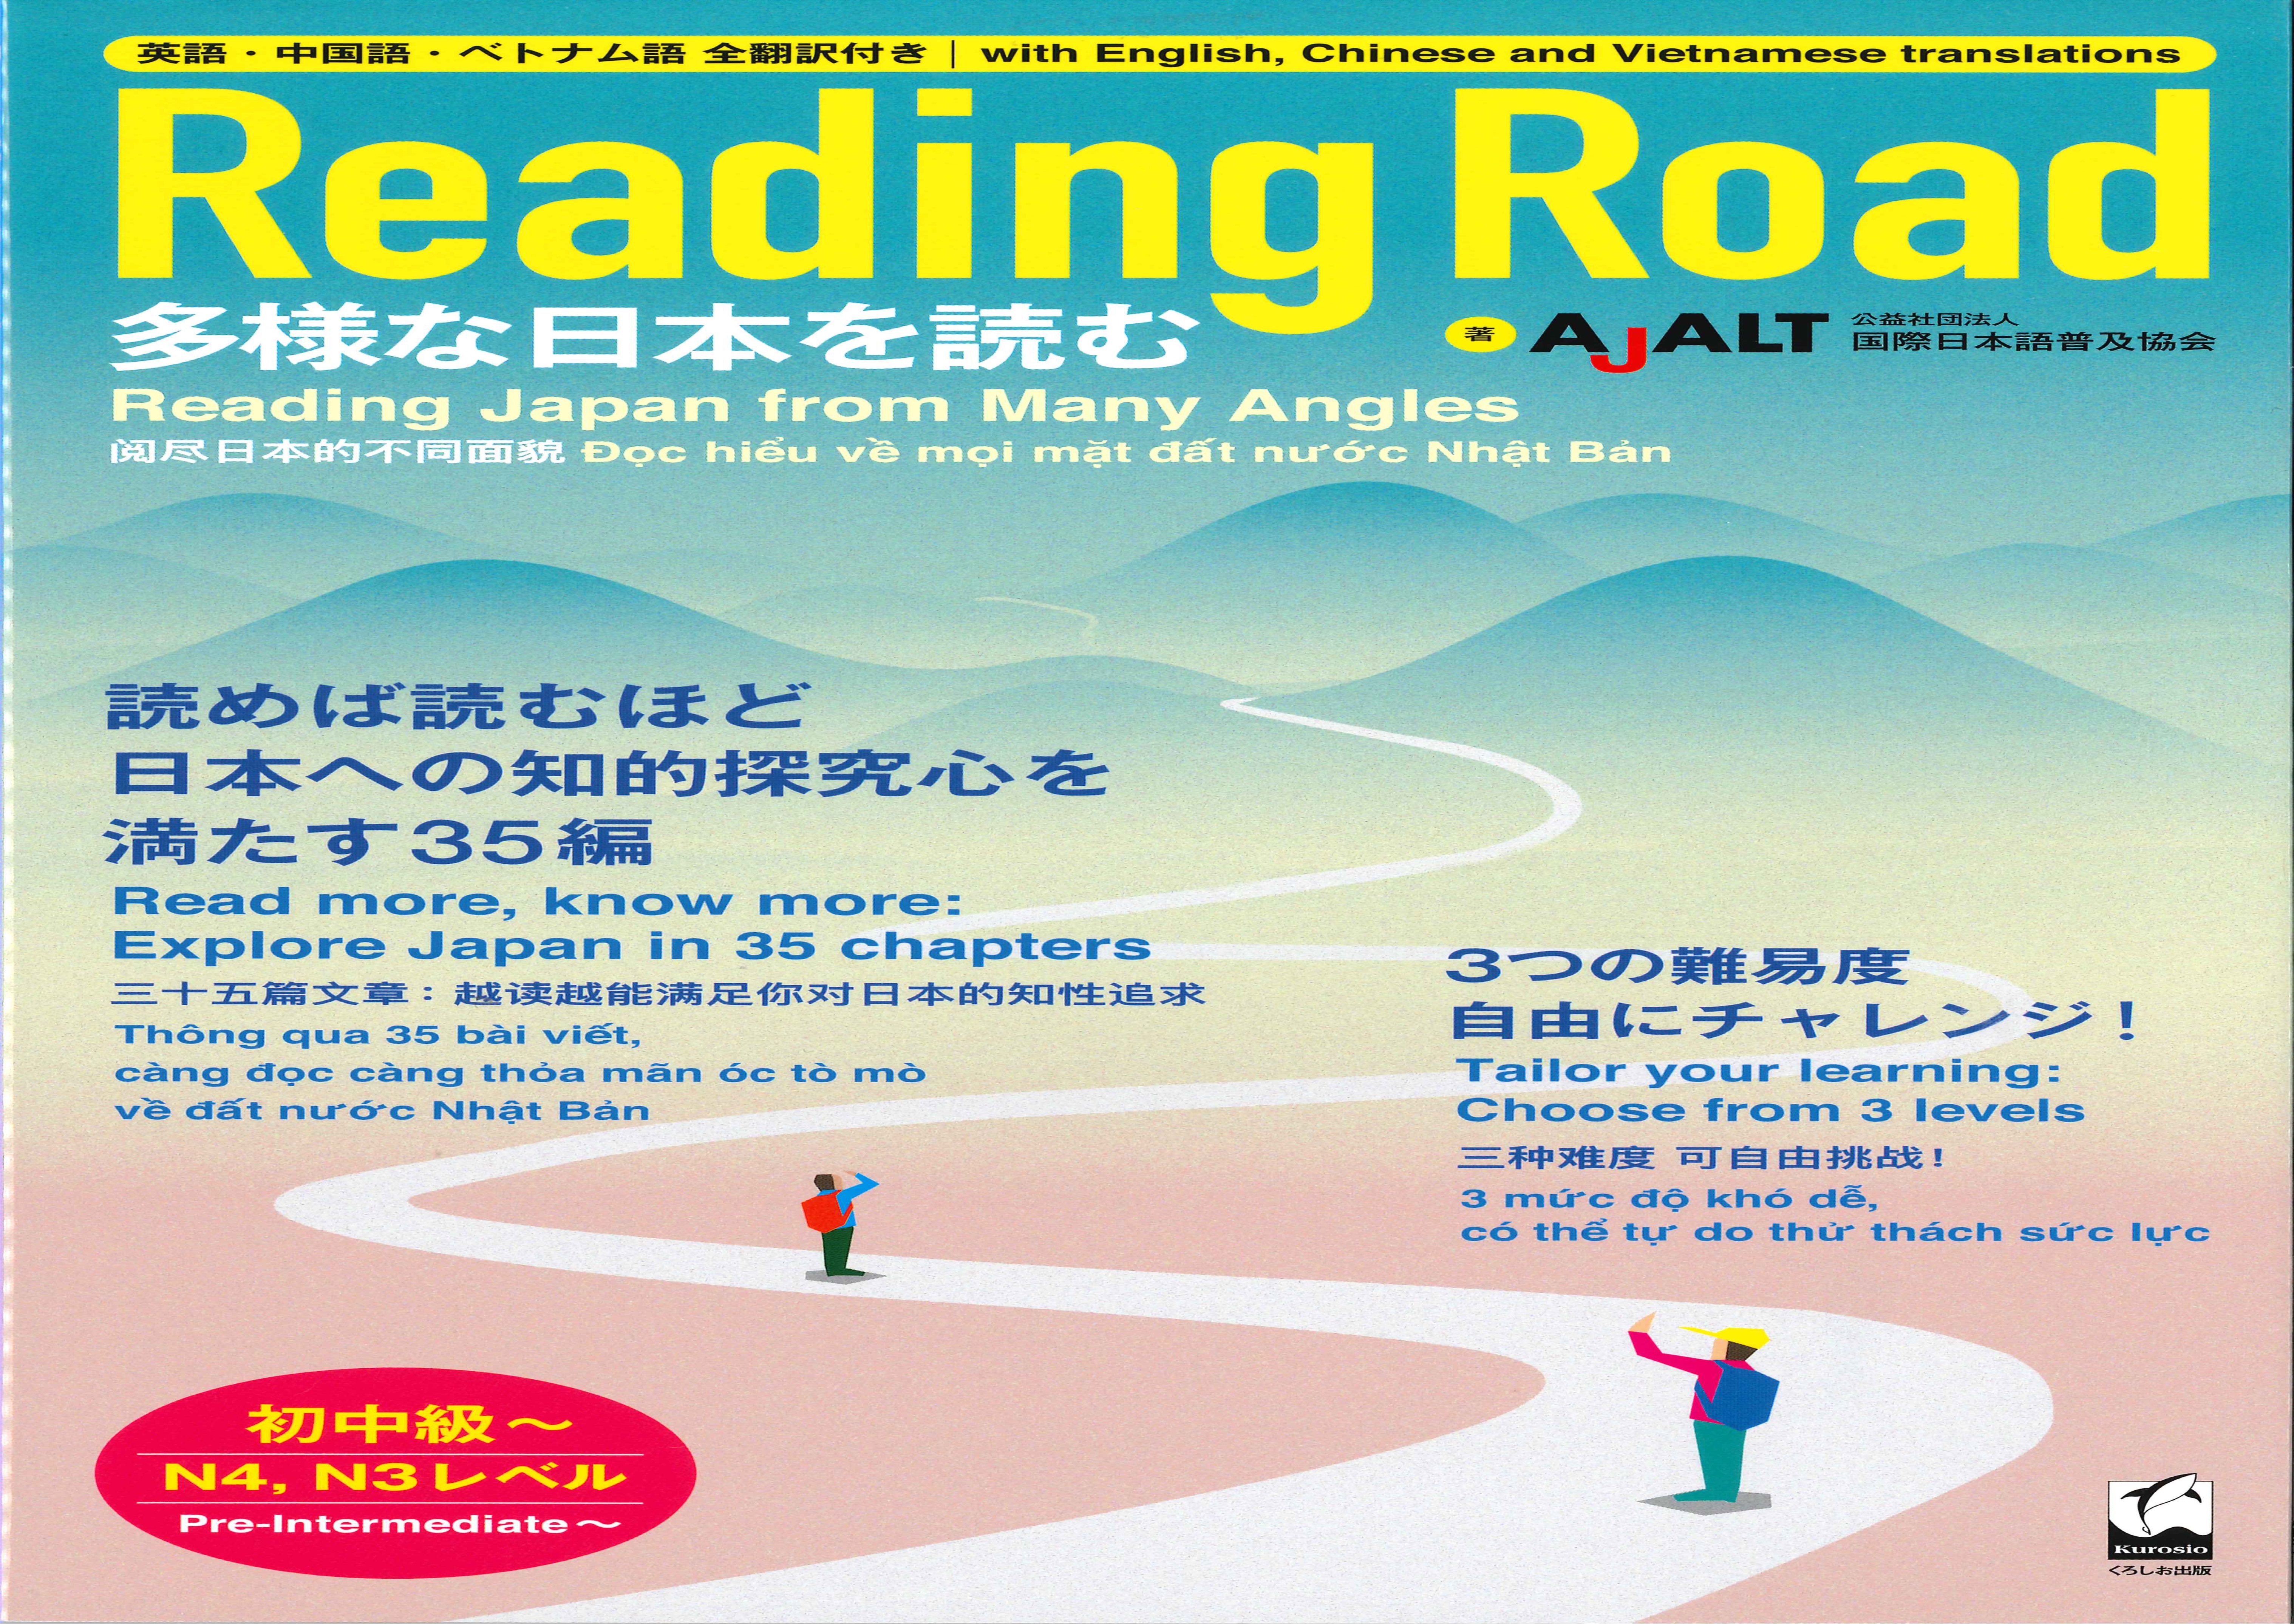 Reading Road